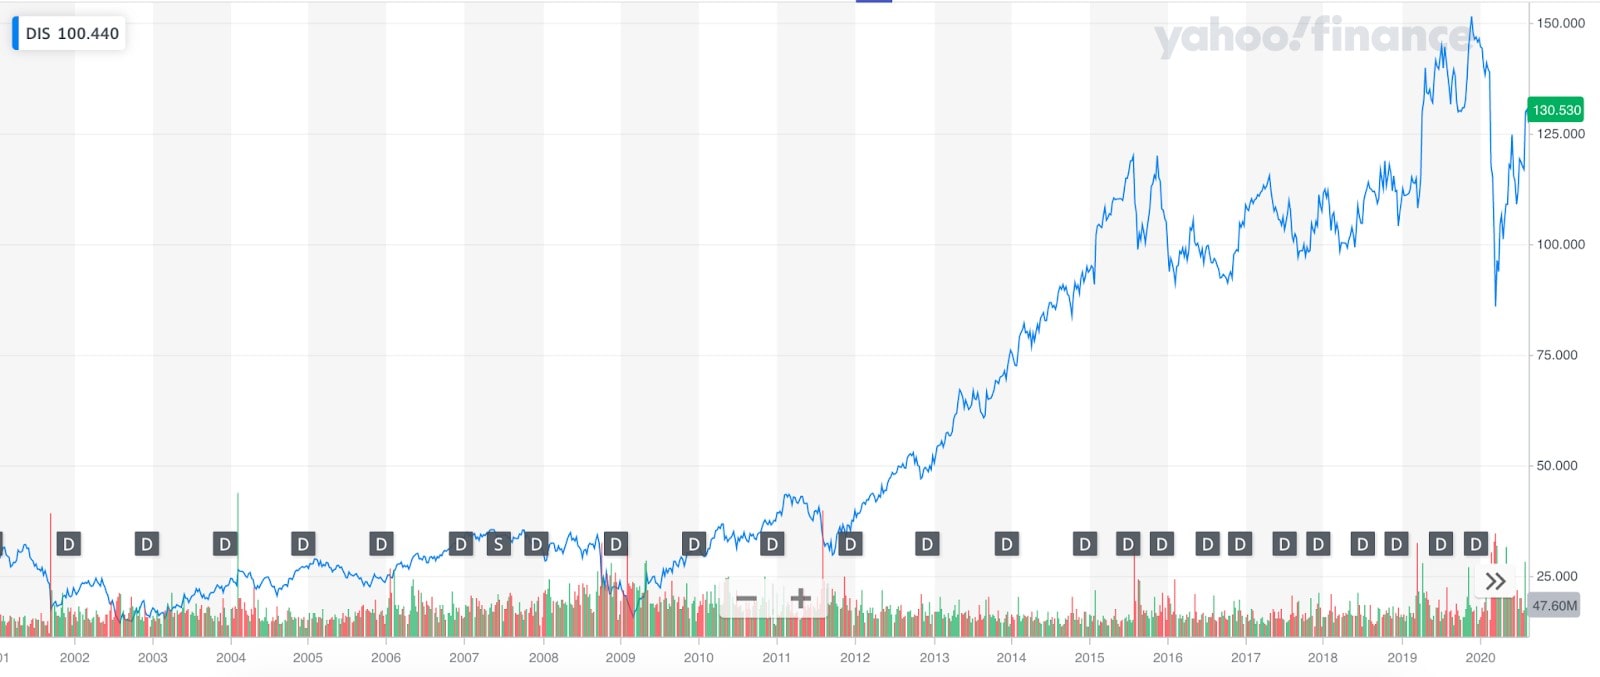 Disney stock performance in 2000s-2010s